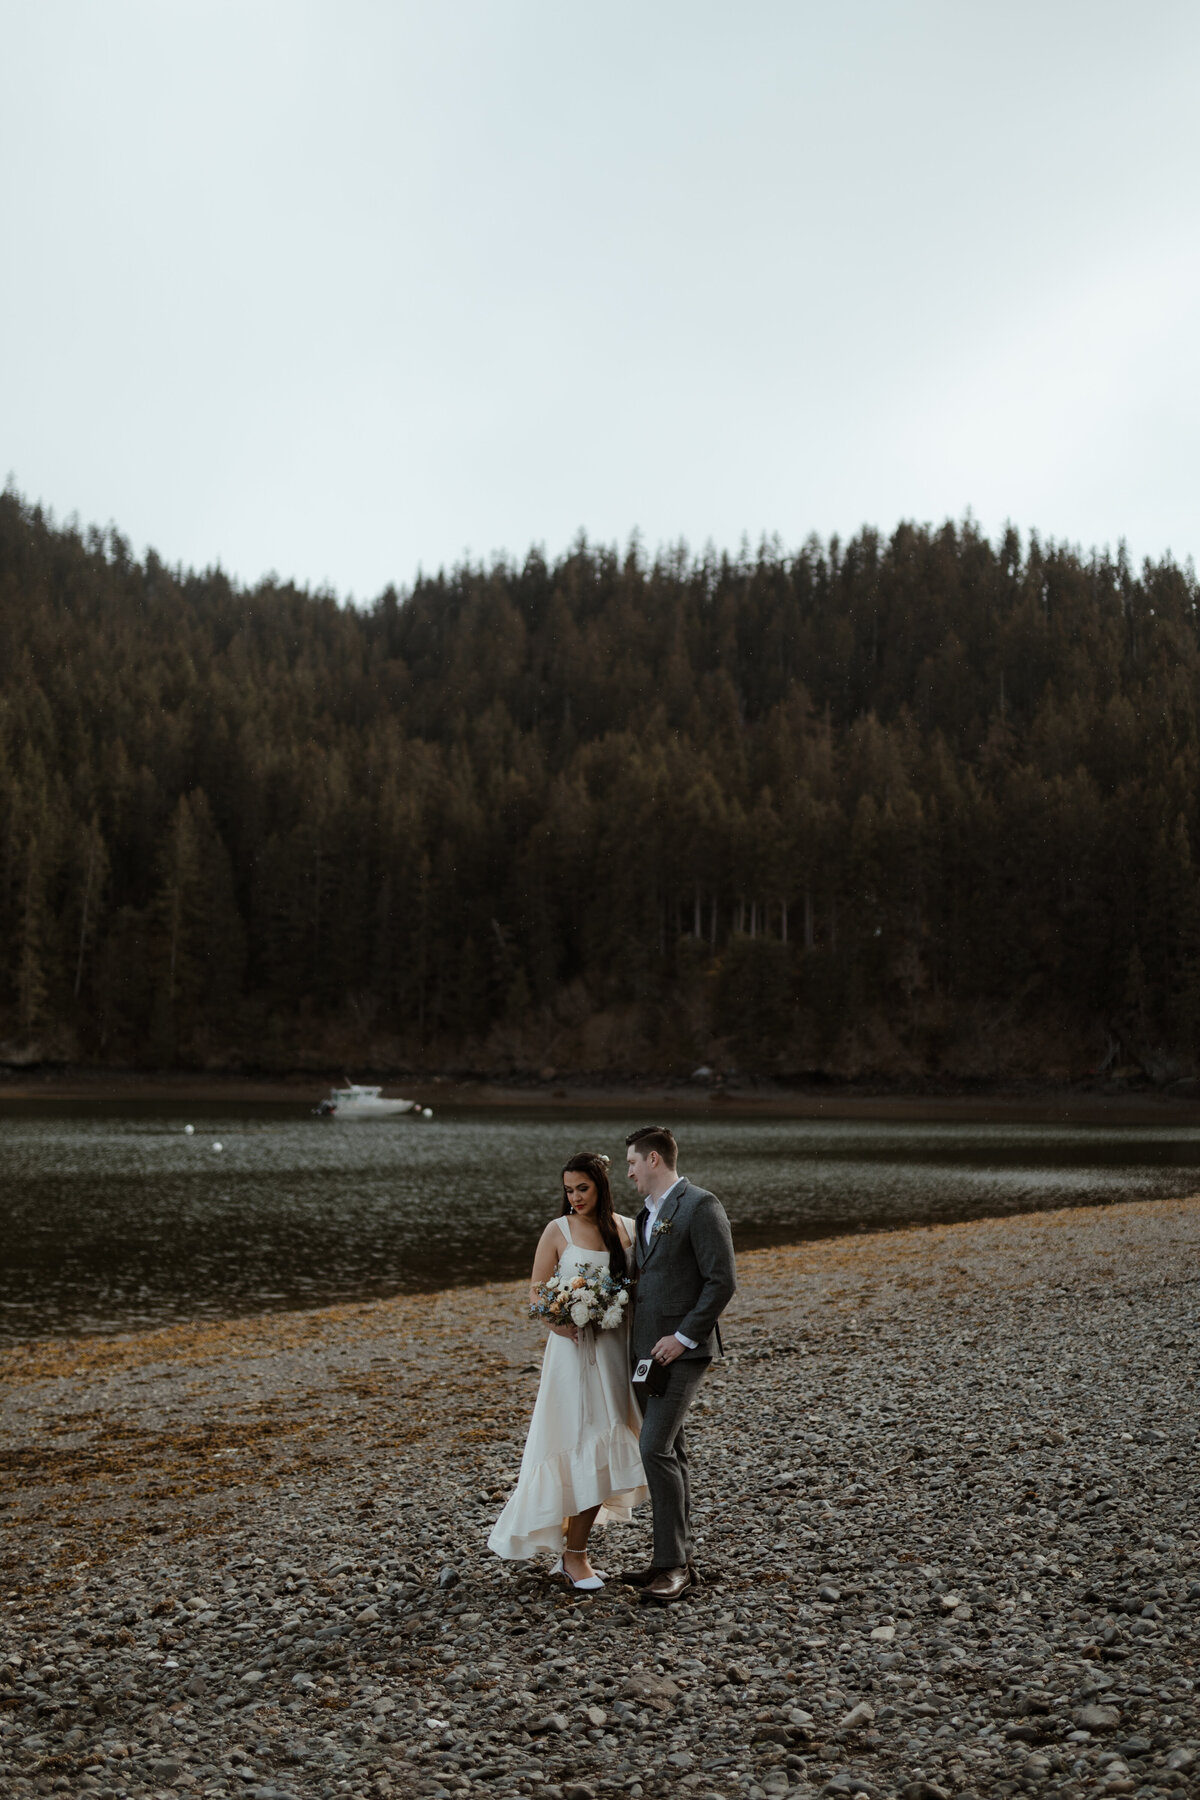 bride and groom posing on beach